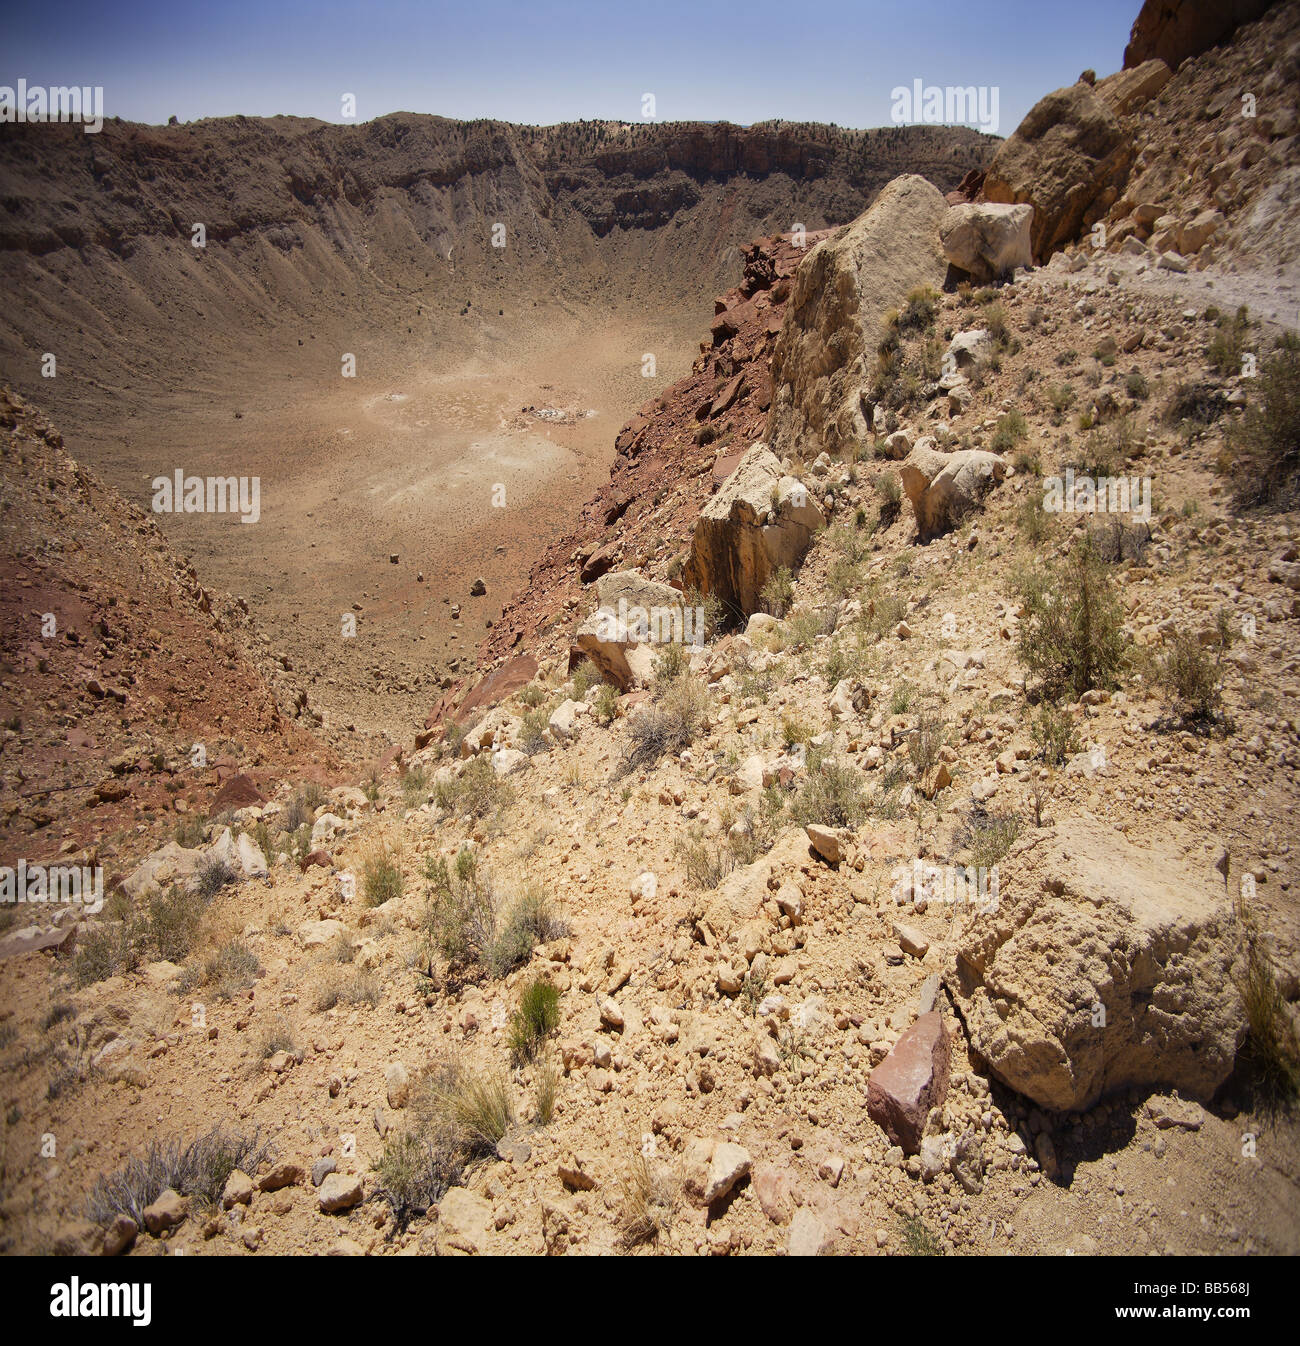 Crater,Arizona,usa,square image. Stock Photo